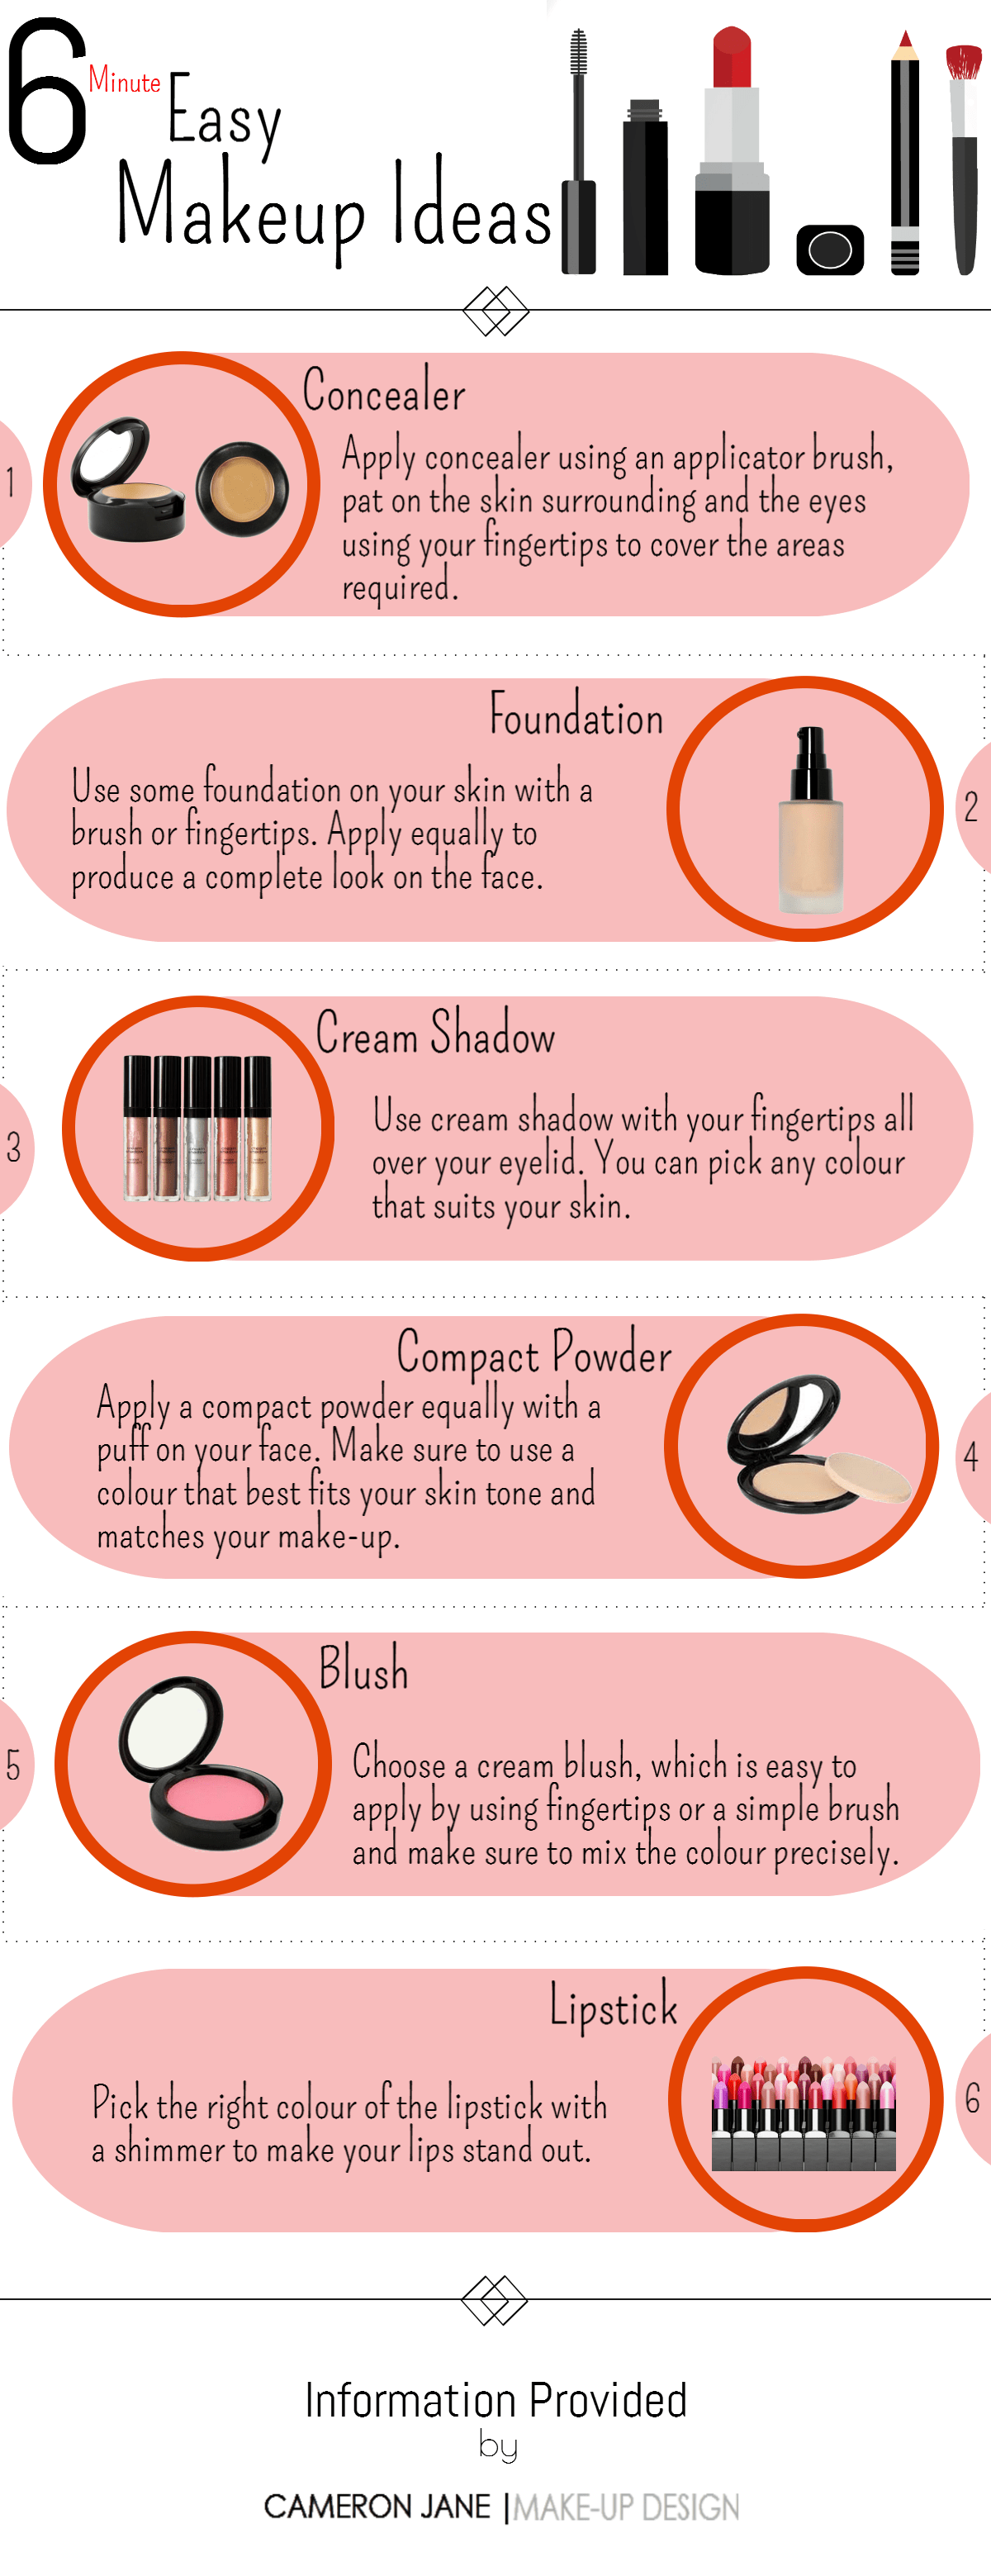 Easy Makeup Ideas